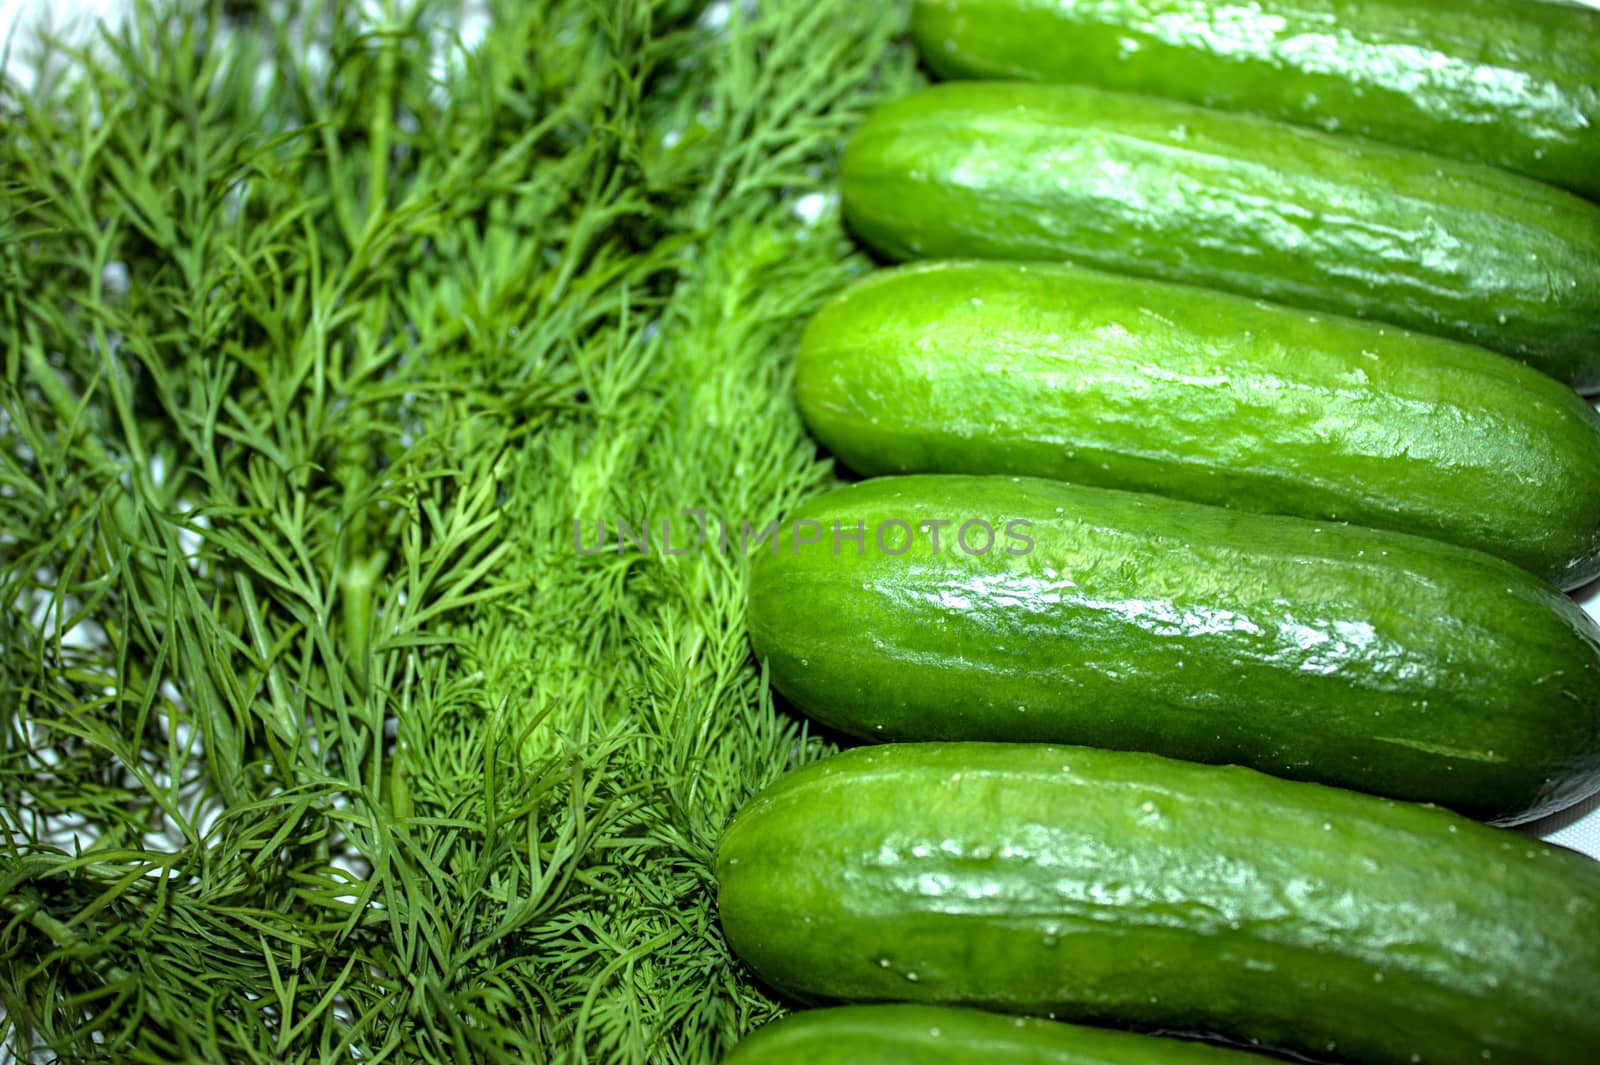 little cucumber and fresh dill by martina_unbehauen